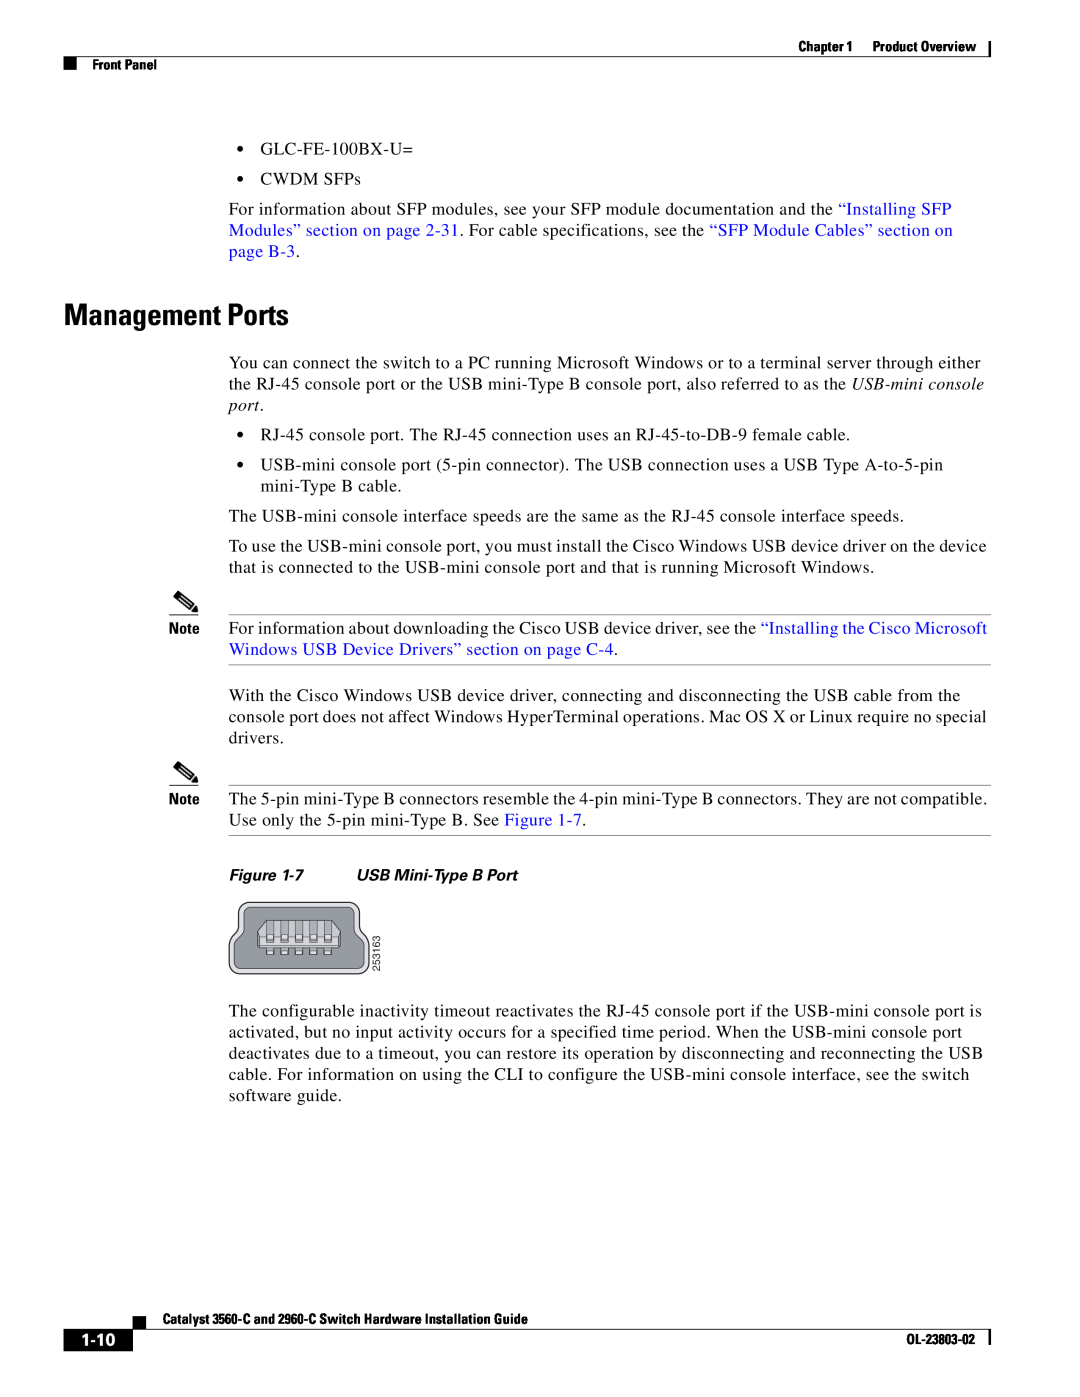 Cisco Systems 3560-C manual Management Ports, 1-10 